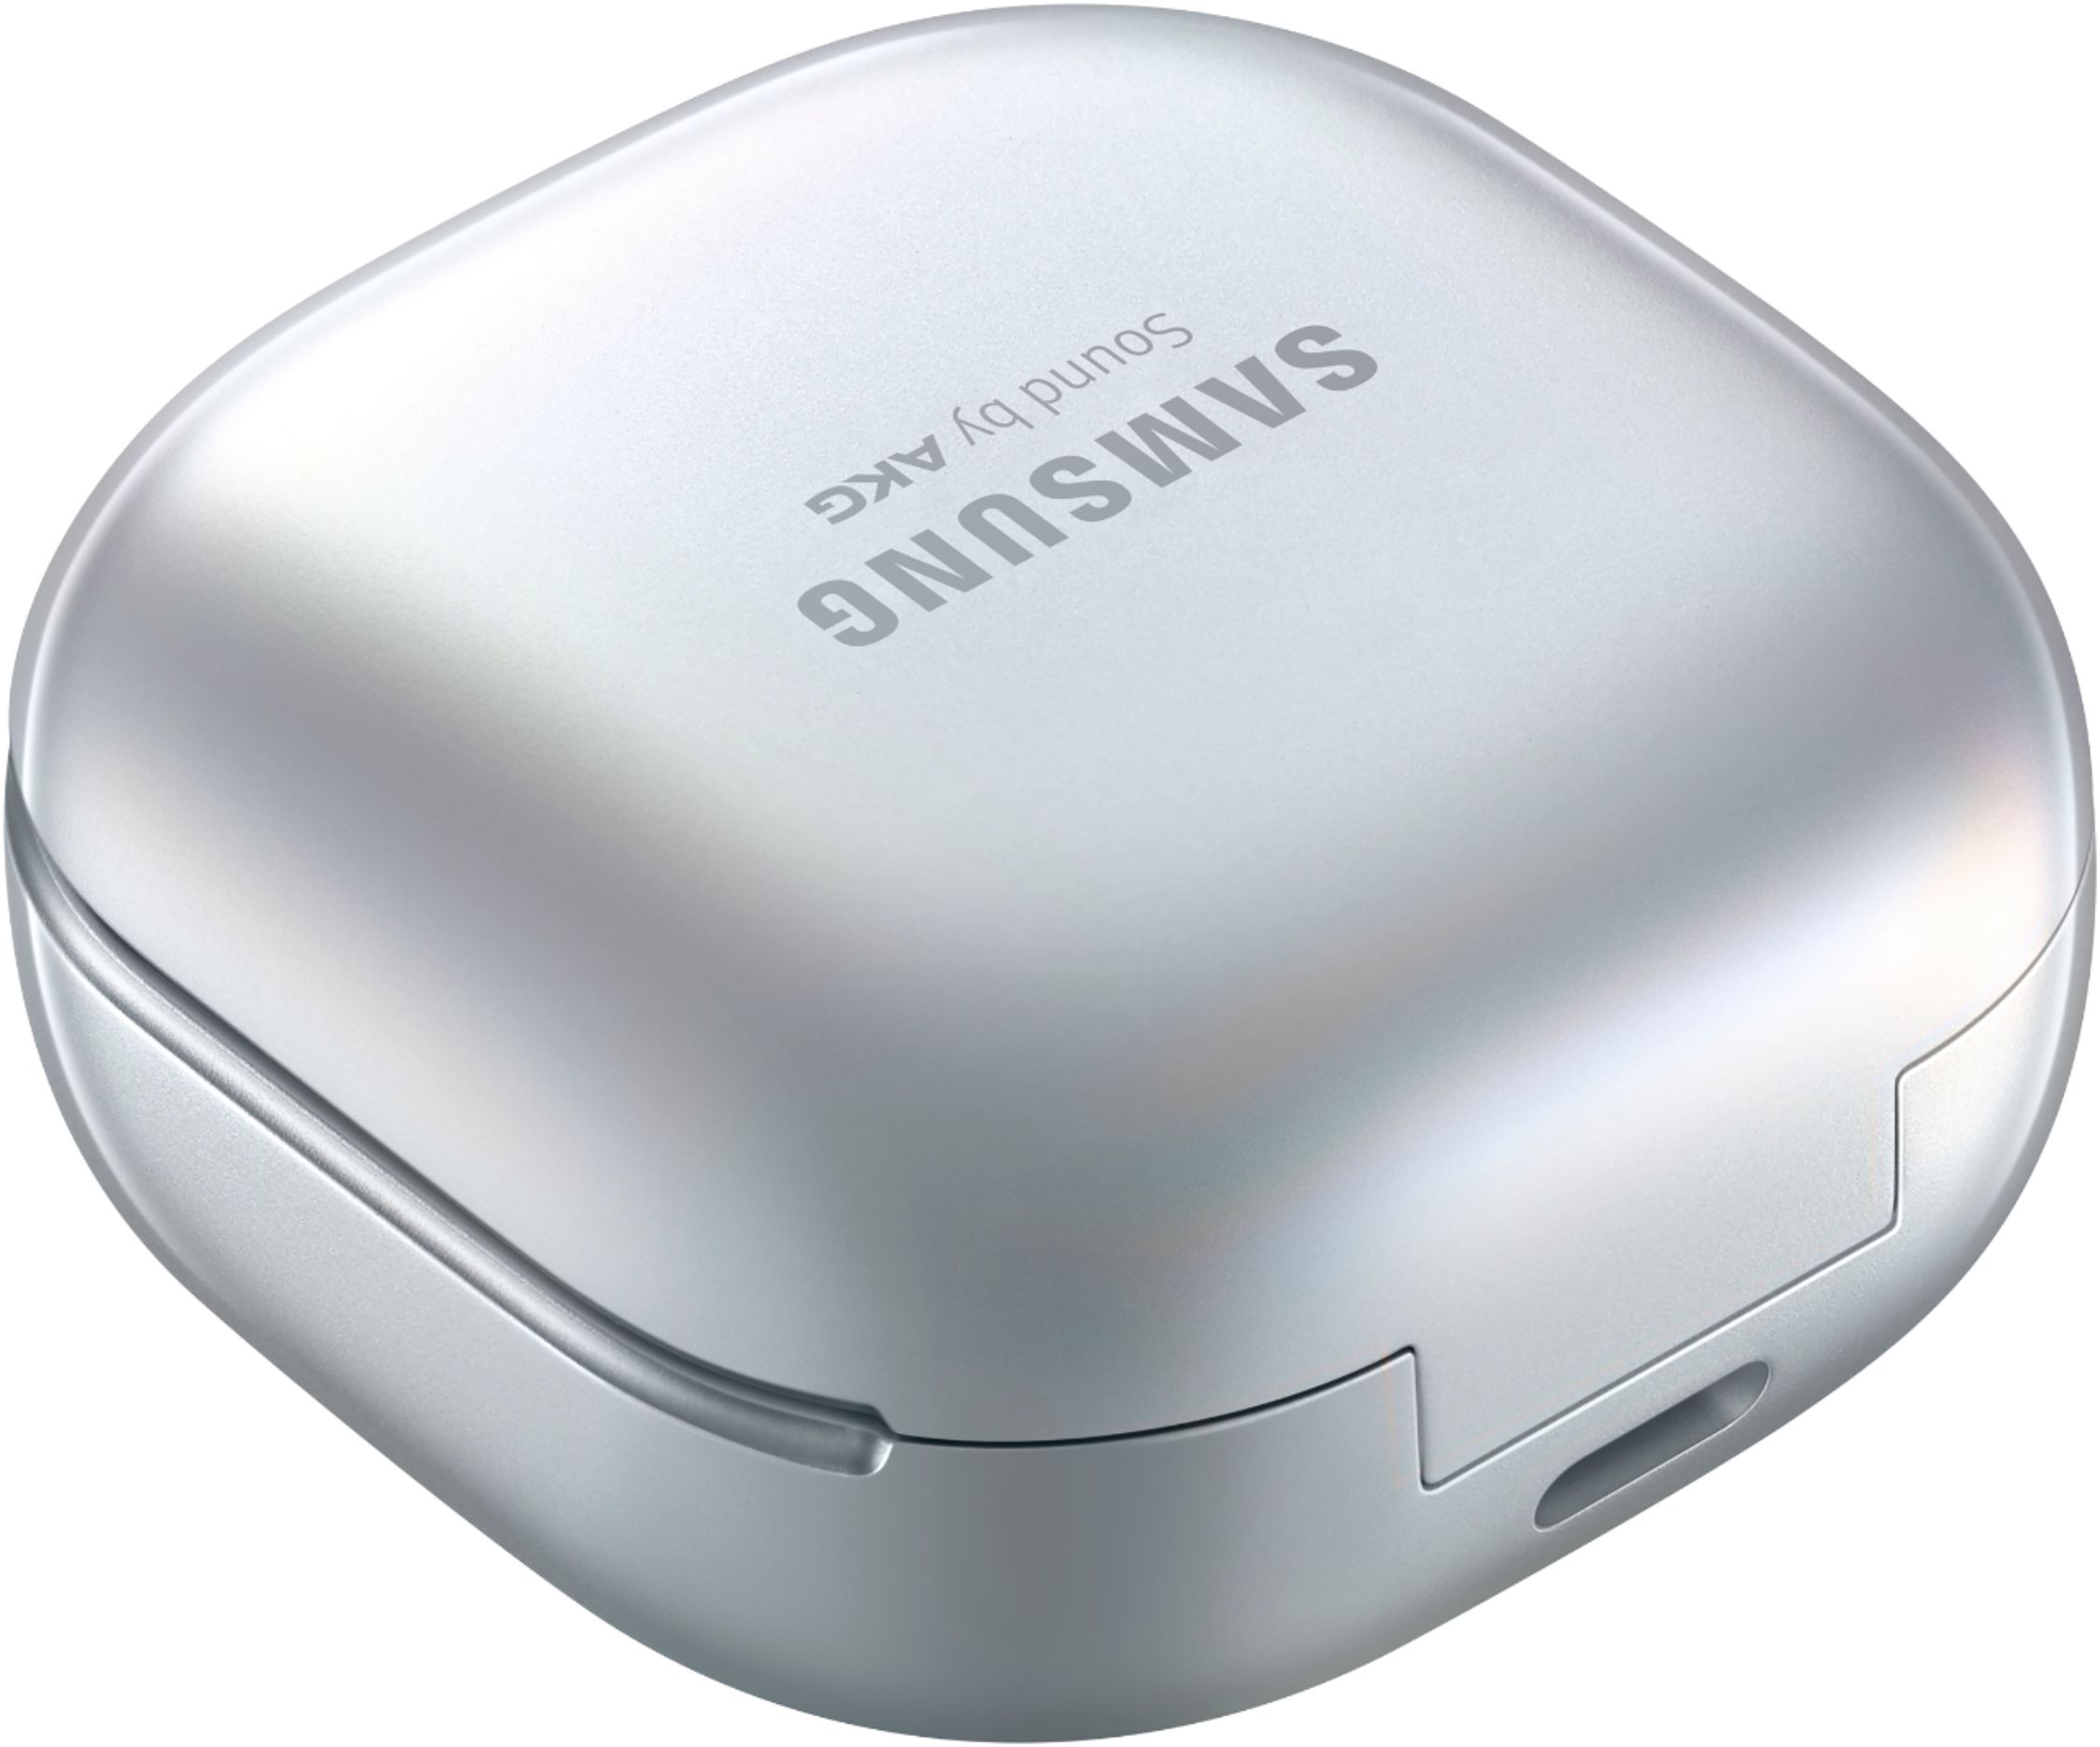 Samsung - Galaxy Buds Pro True Wireless Earbud Headphones - Phantom Silver